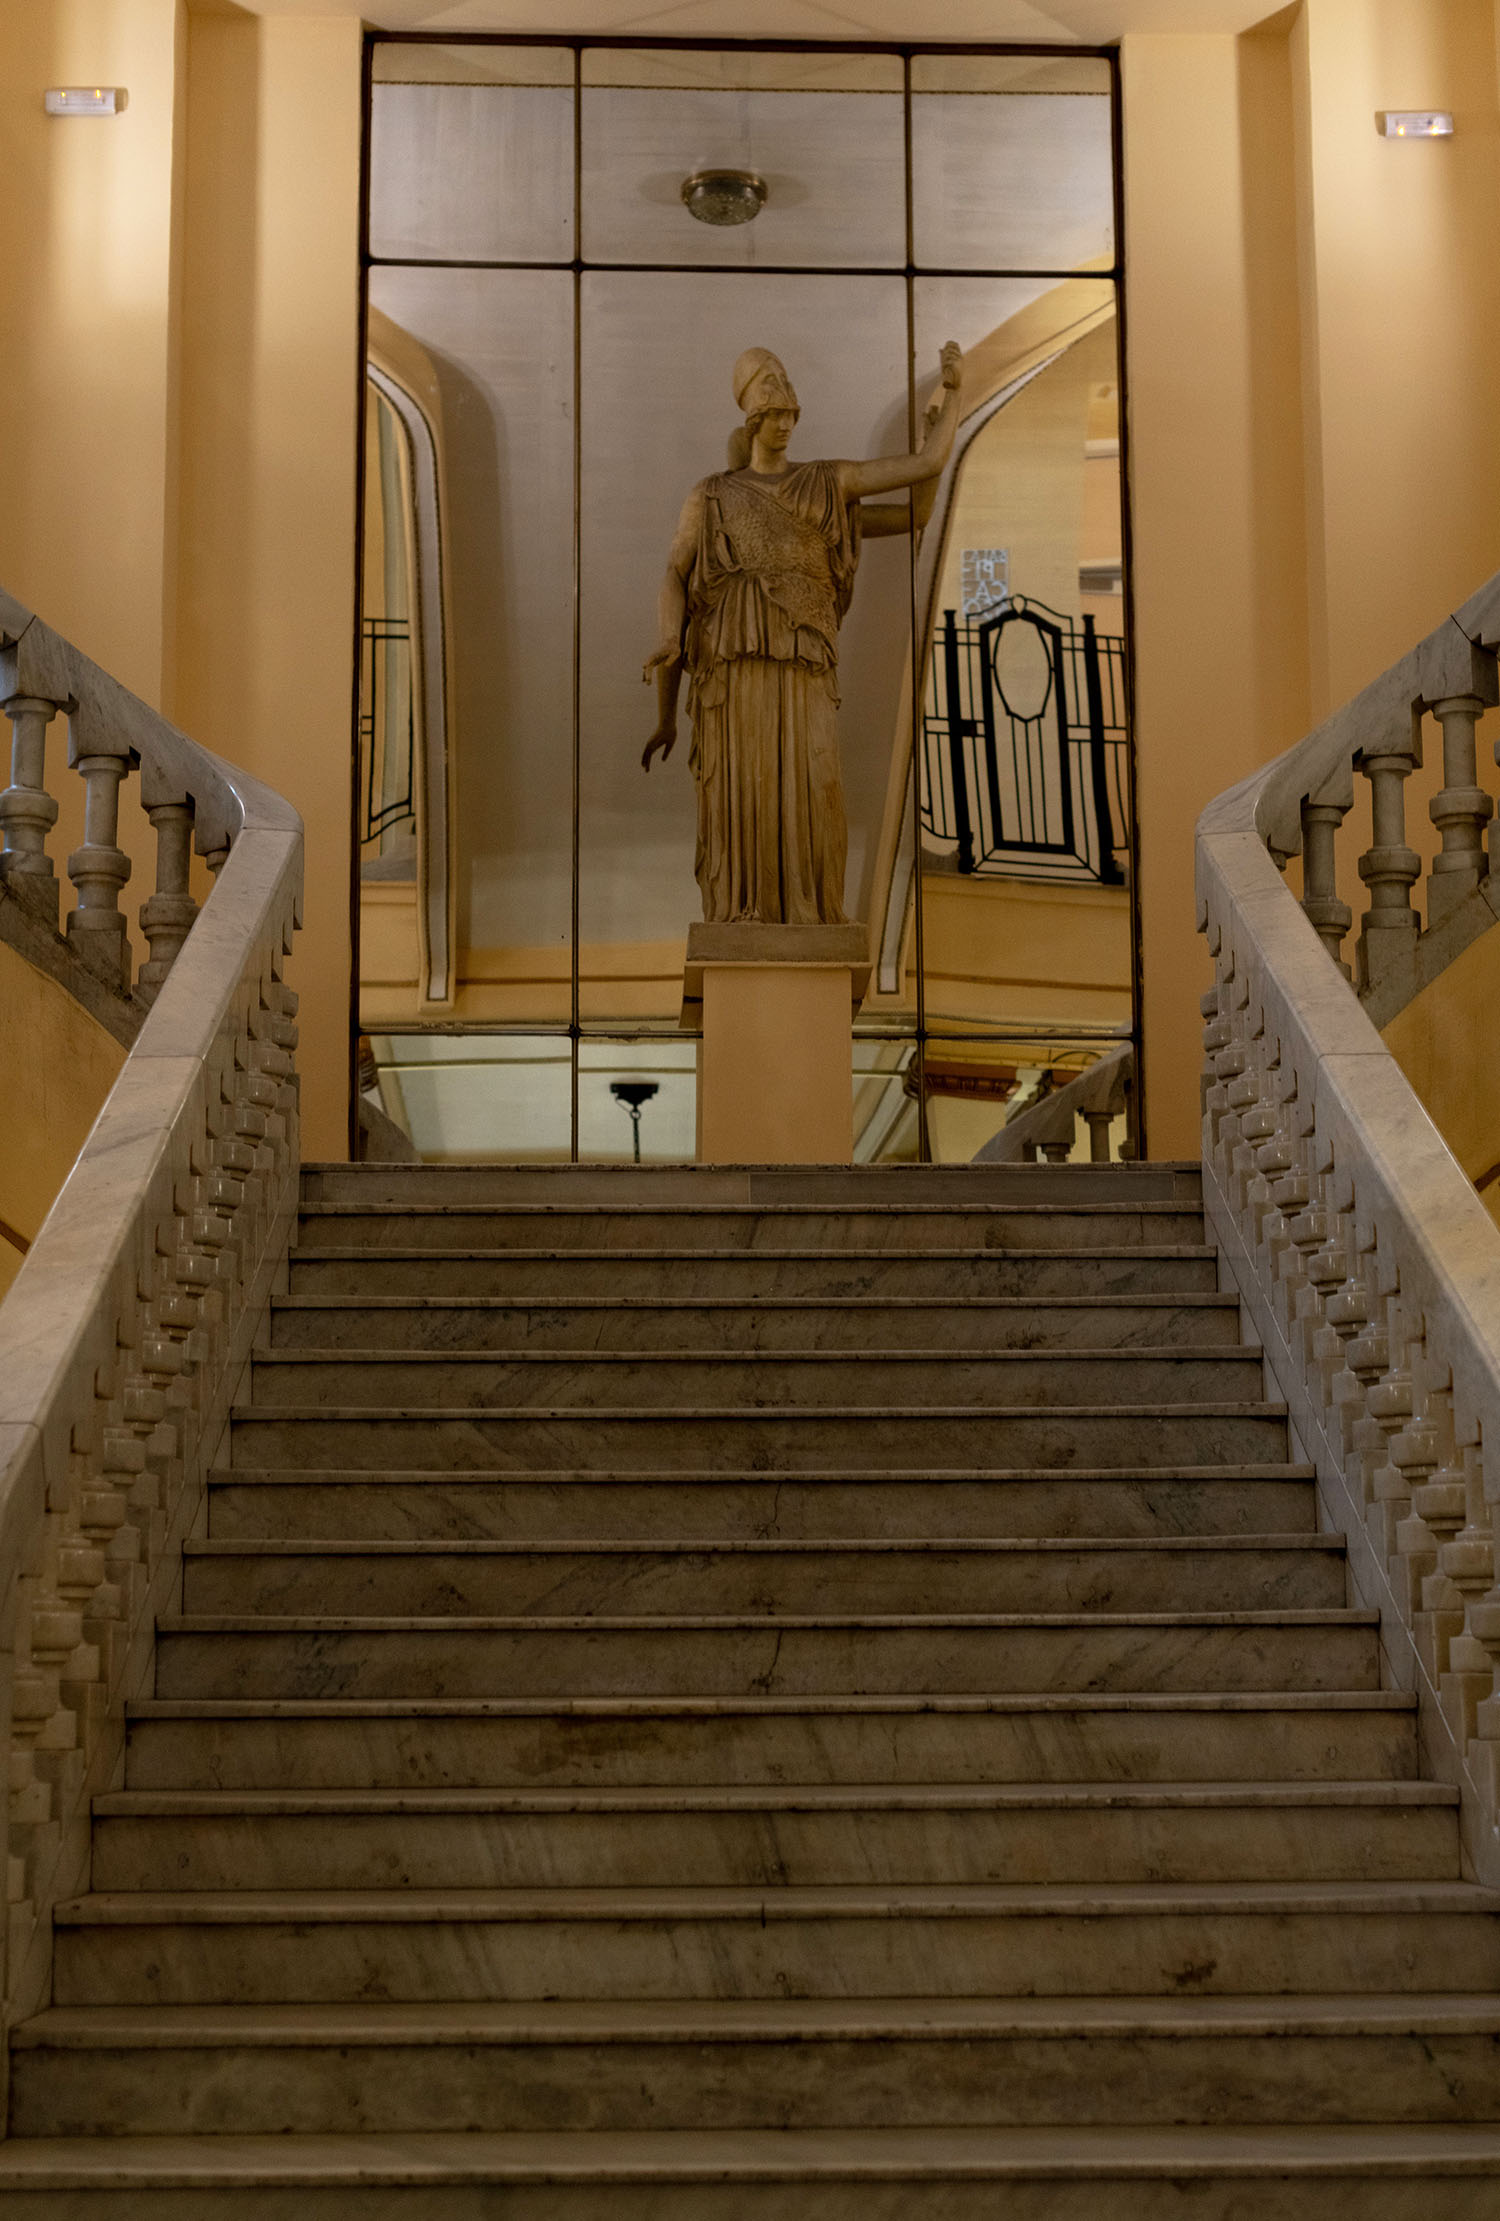 Coco & Voltaire - Marble staircase and statue in Circulo de Bellas Artes in Madrid